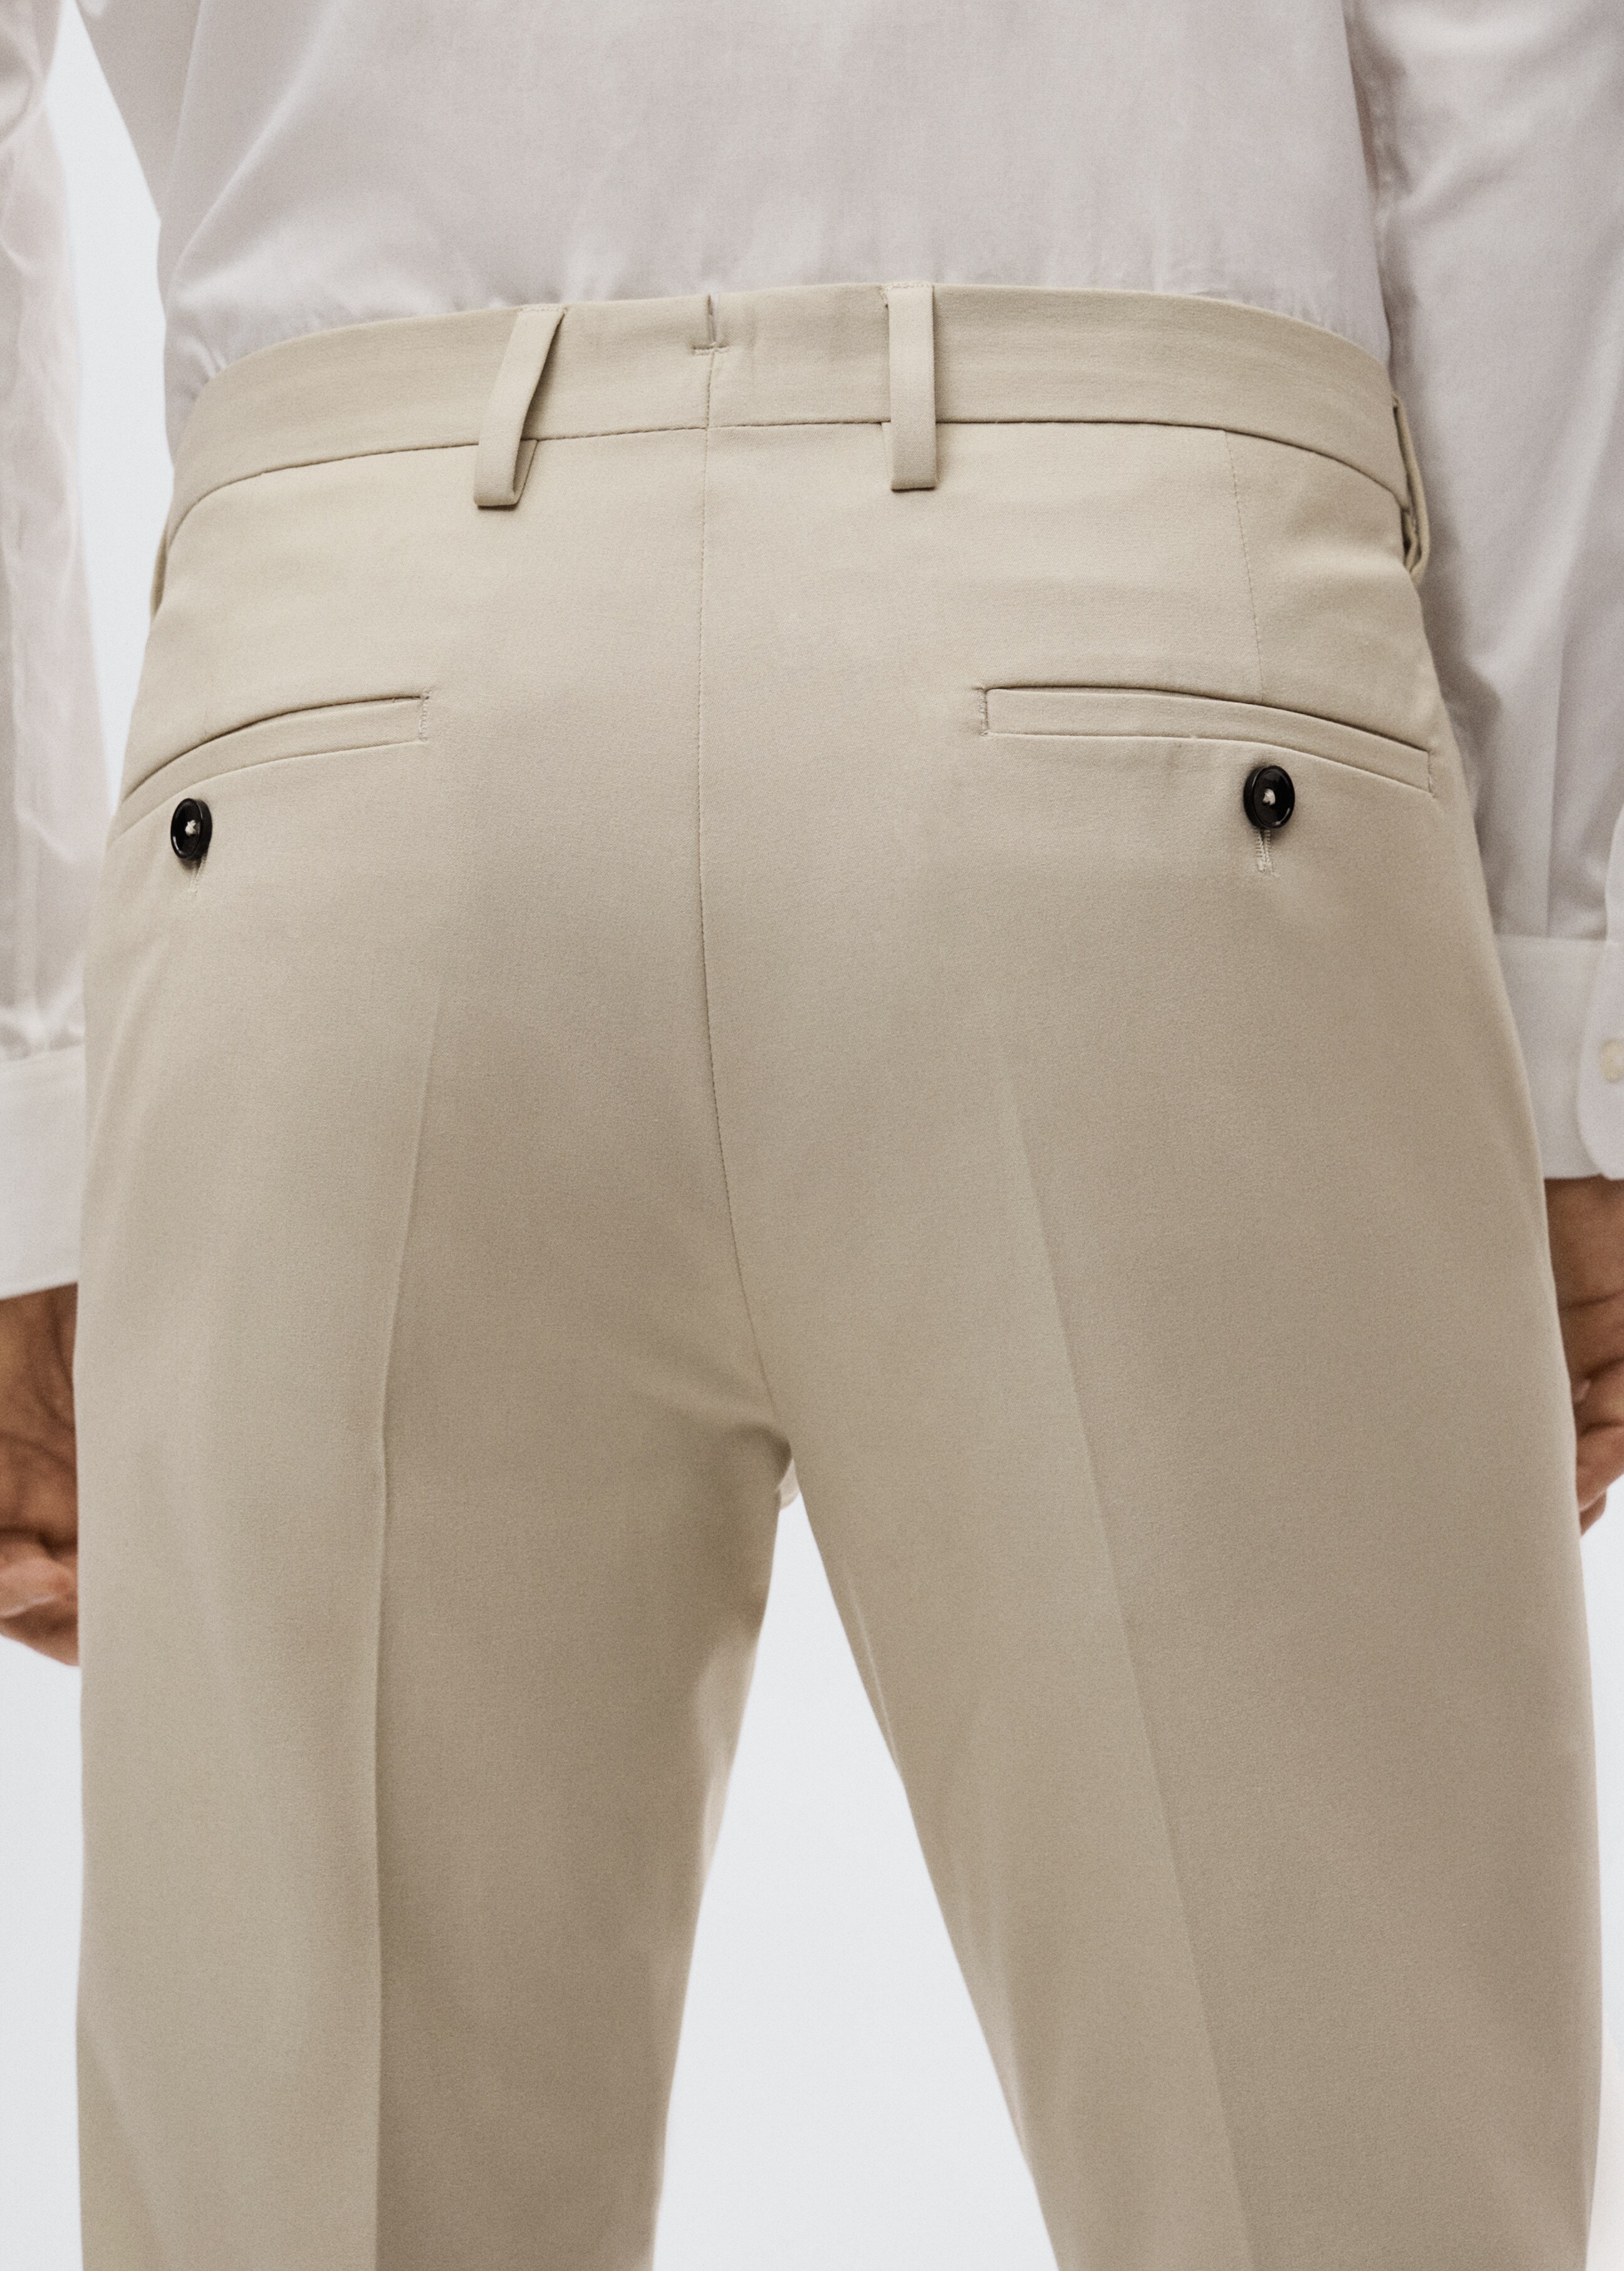 Super slim fit suit trousers - Details of the article 3